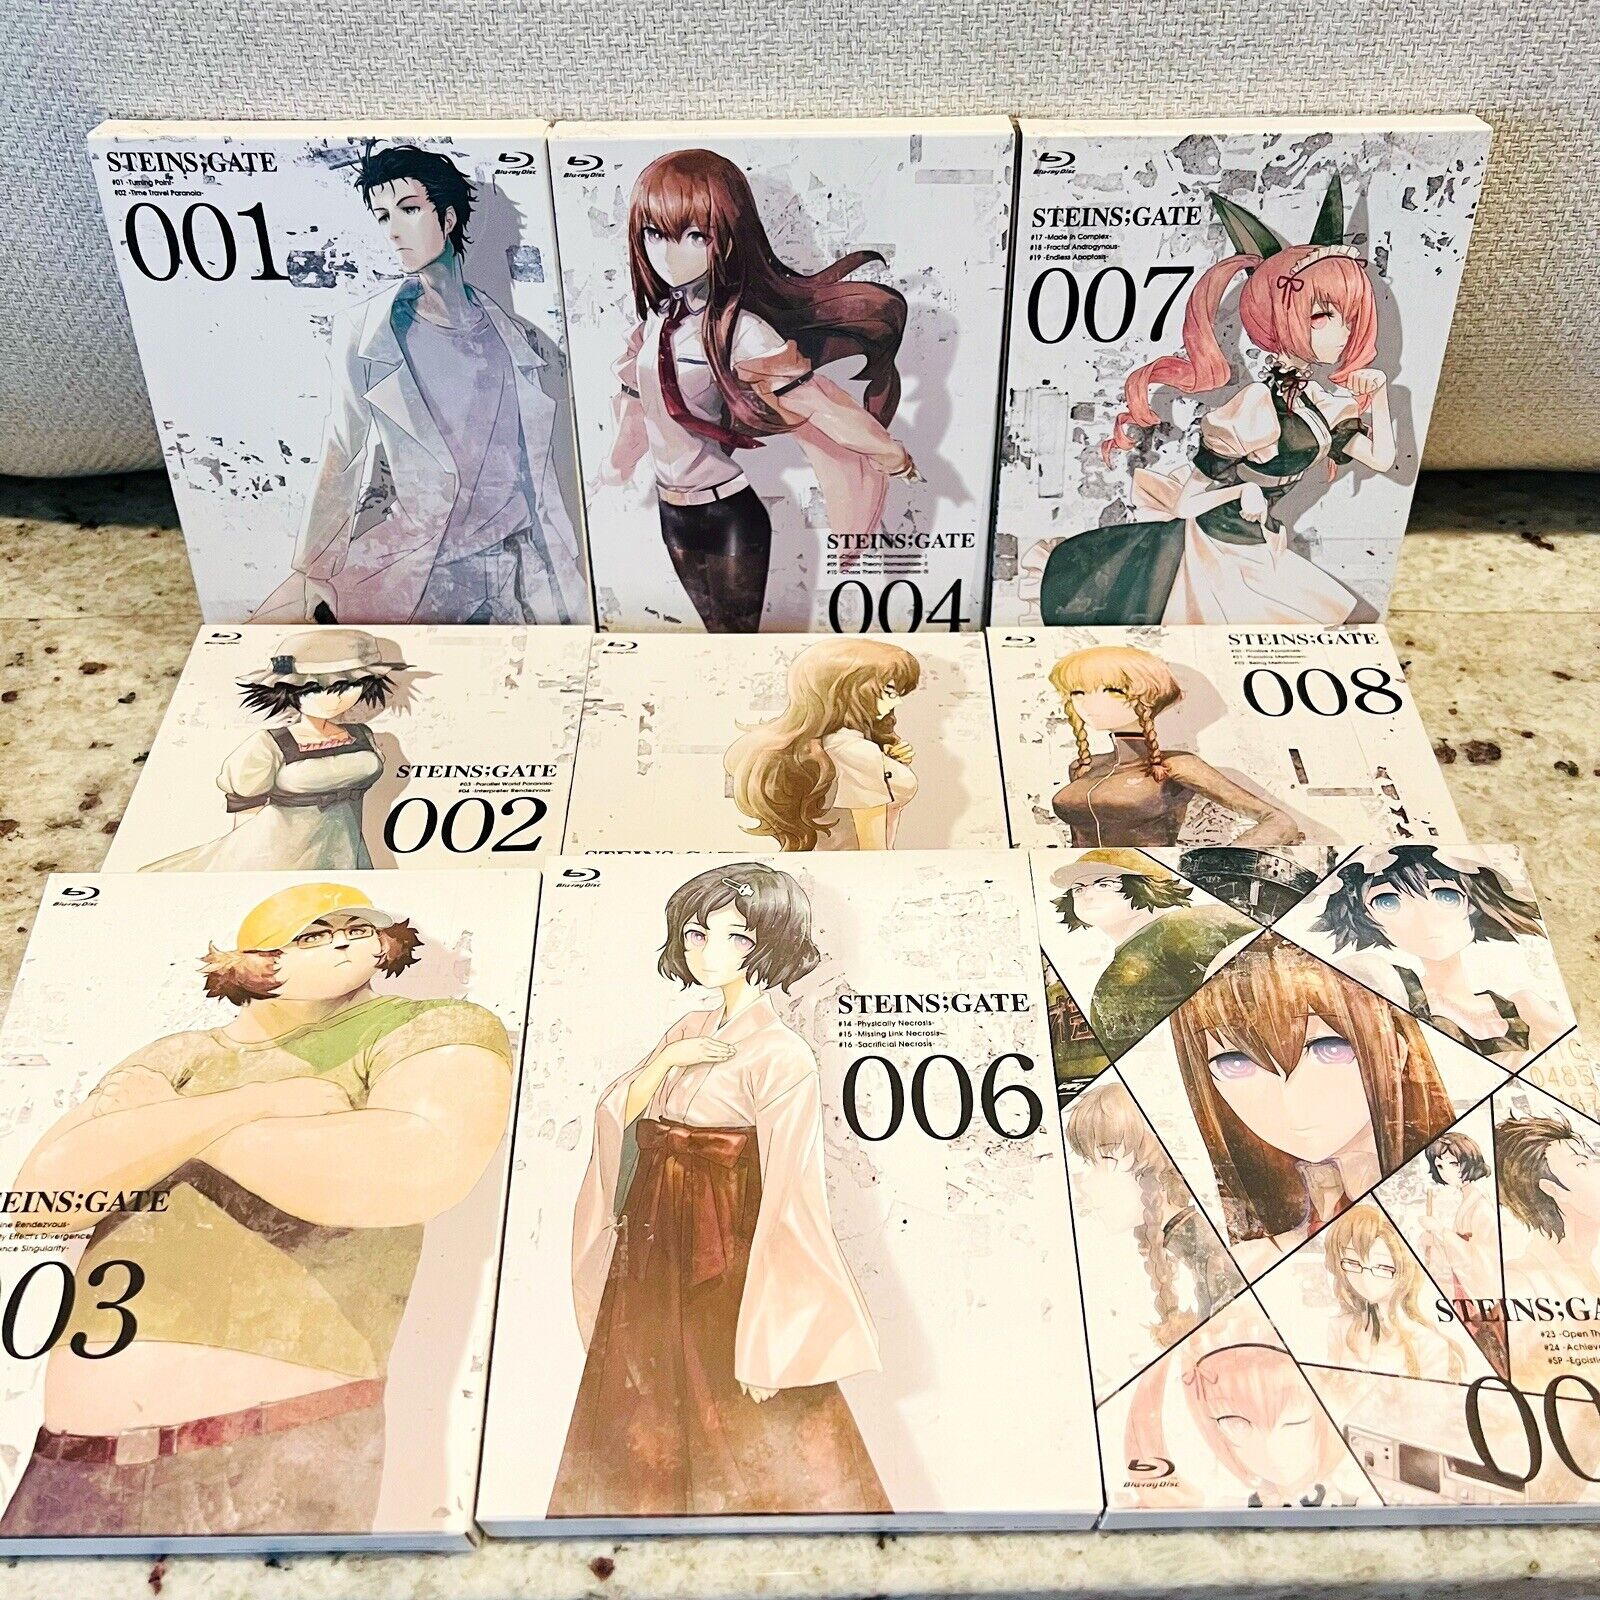 [Steins Gate] IMPORTED TV 24 ep. +SP - Blu ray & Drama CD # Okabe Kurisu Mayuri